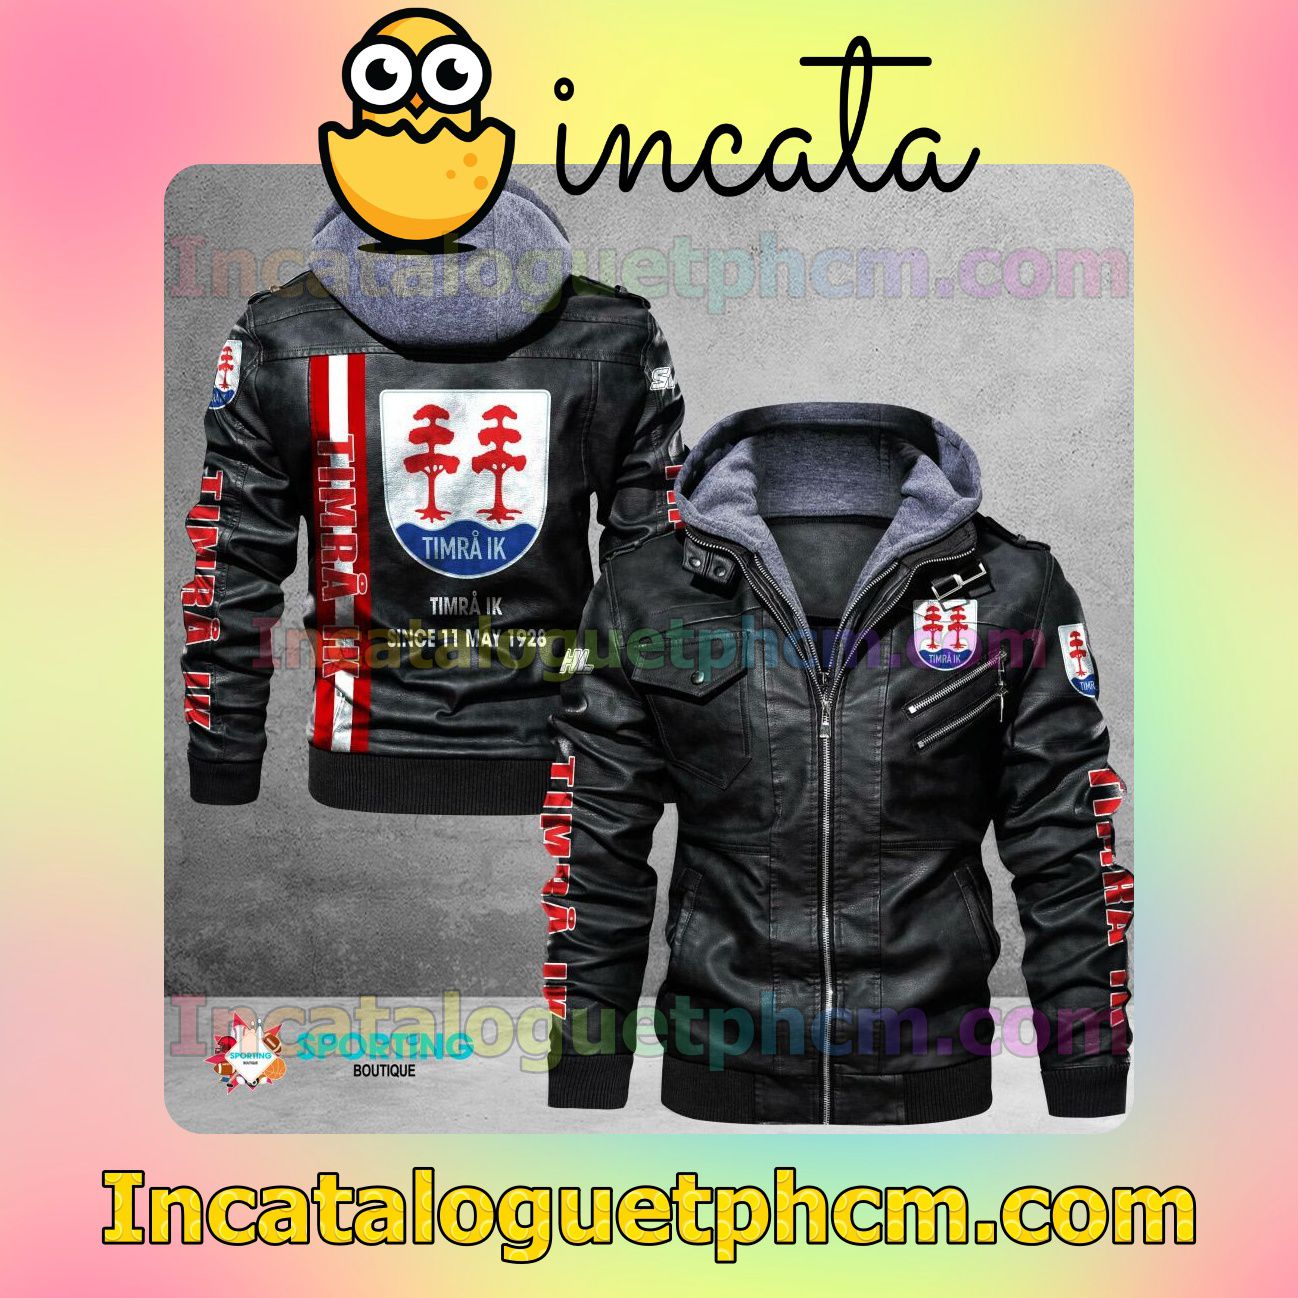 Timra IK Brand Uniform Leather Jacket